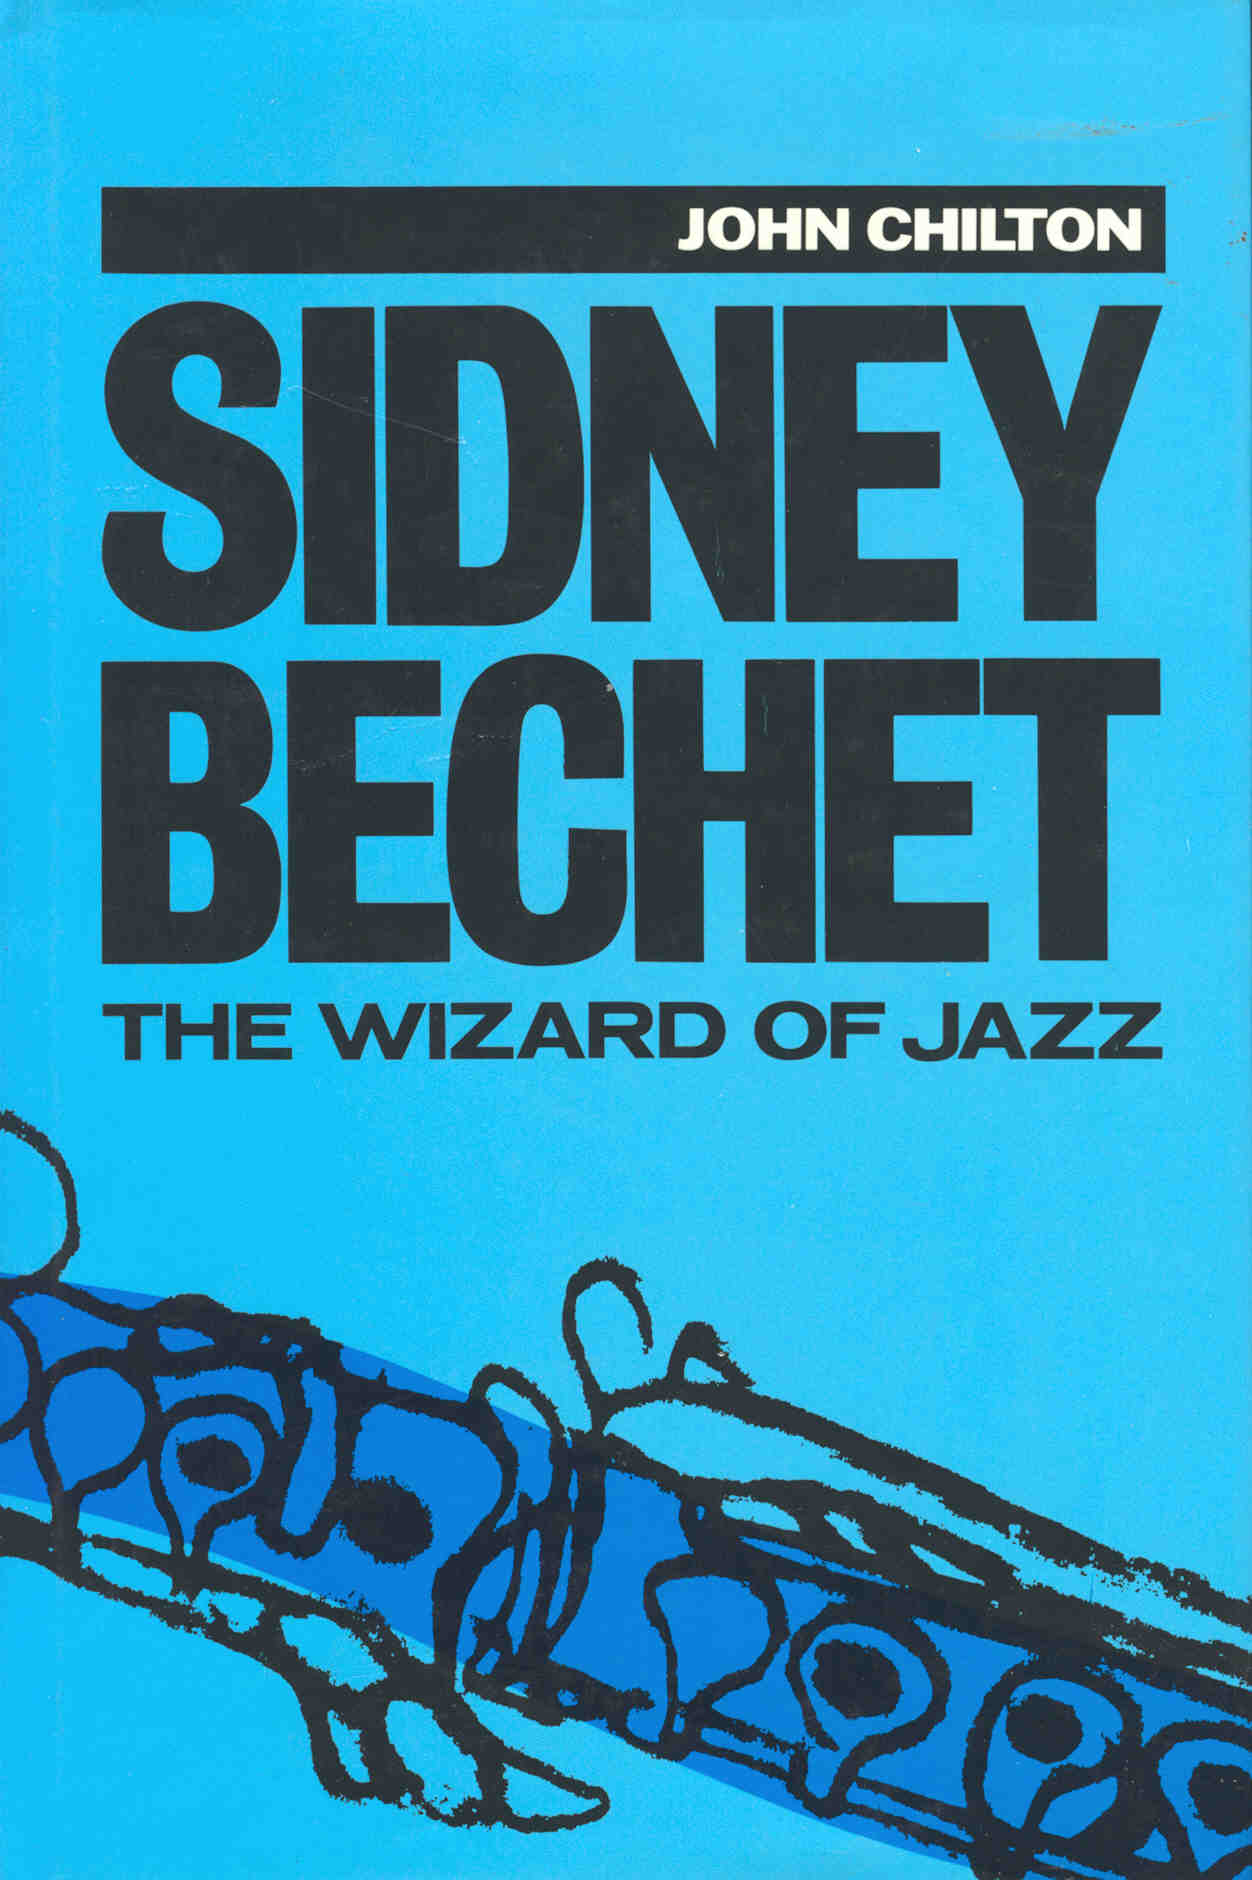 Image Sidney Bechet the wizard of jazz